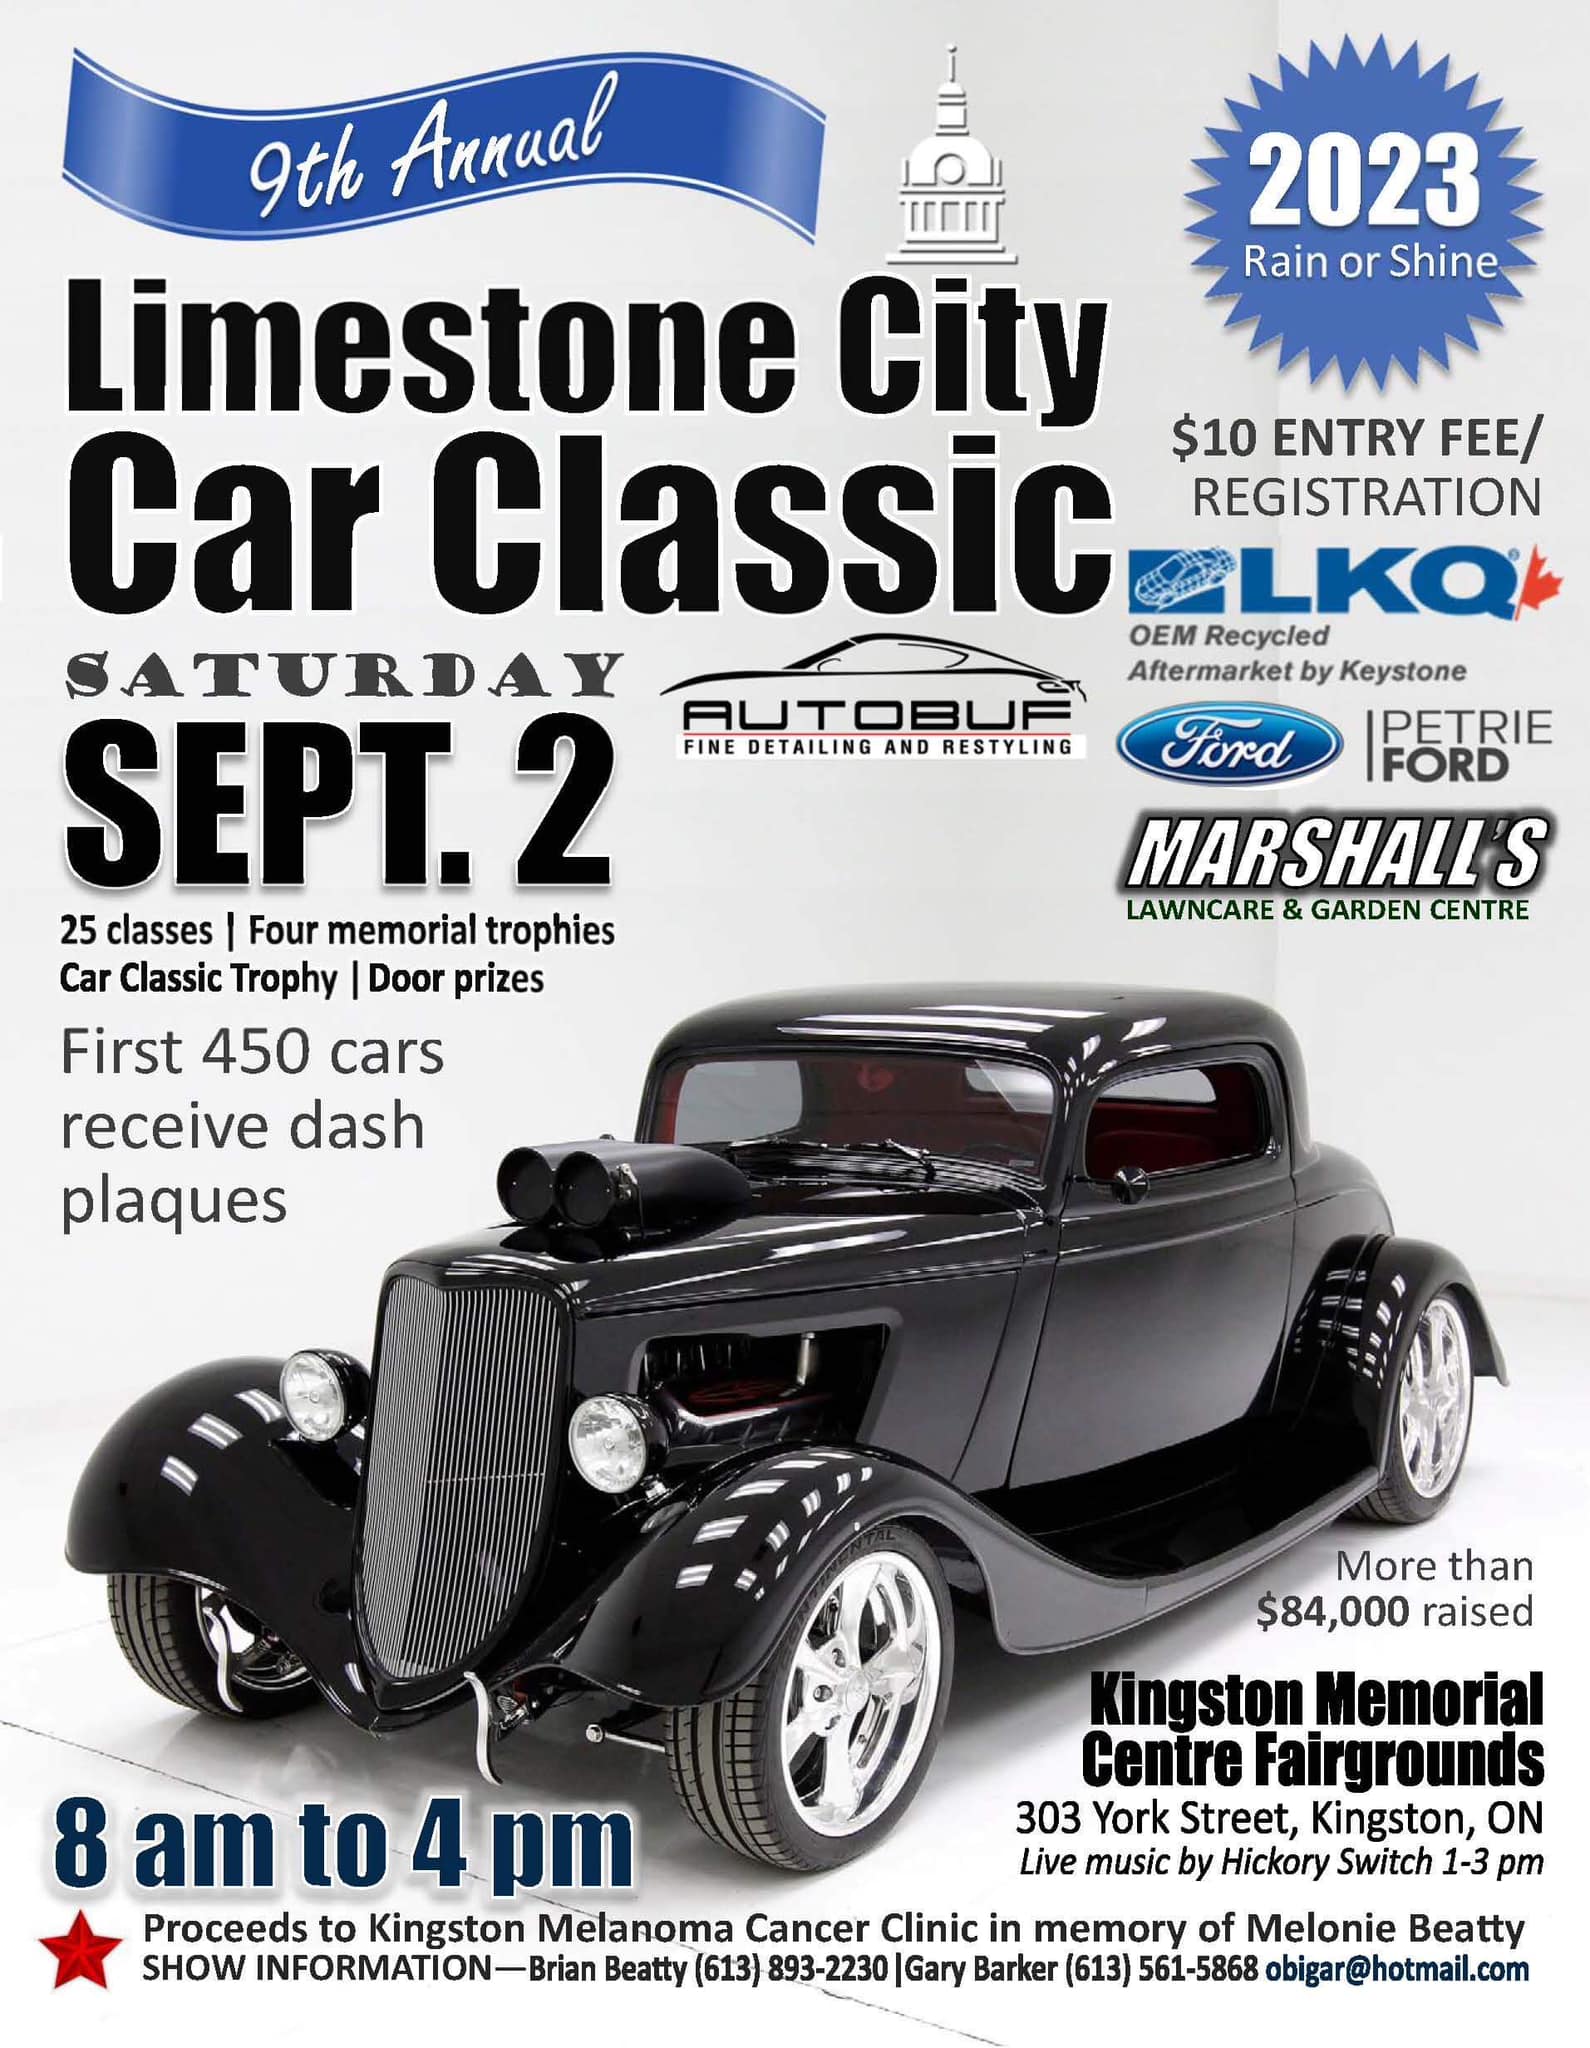 9th Annual Limestone City Car Classic Image